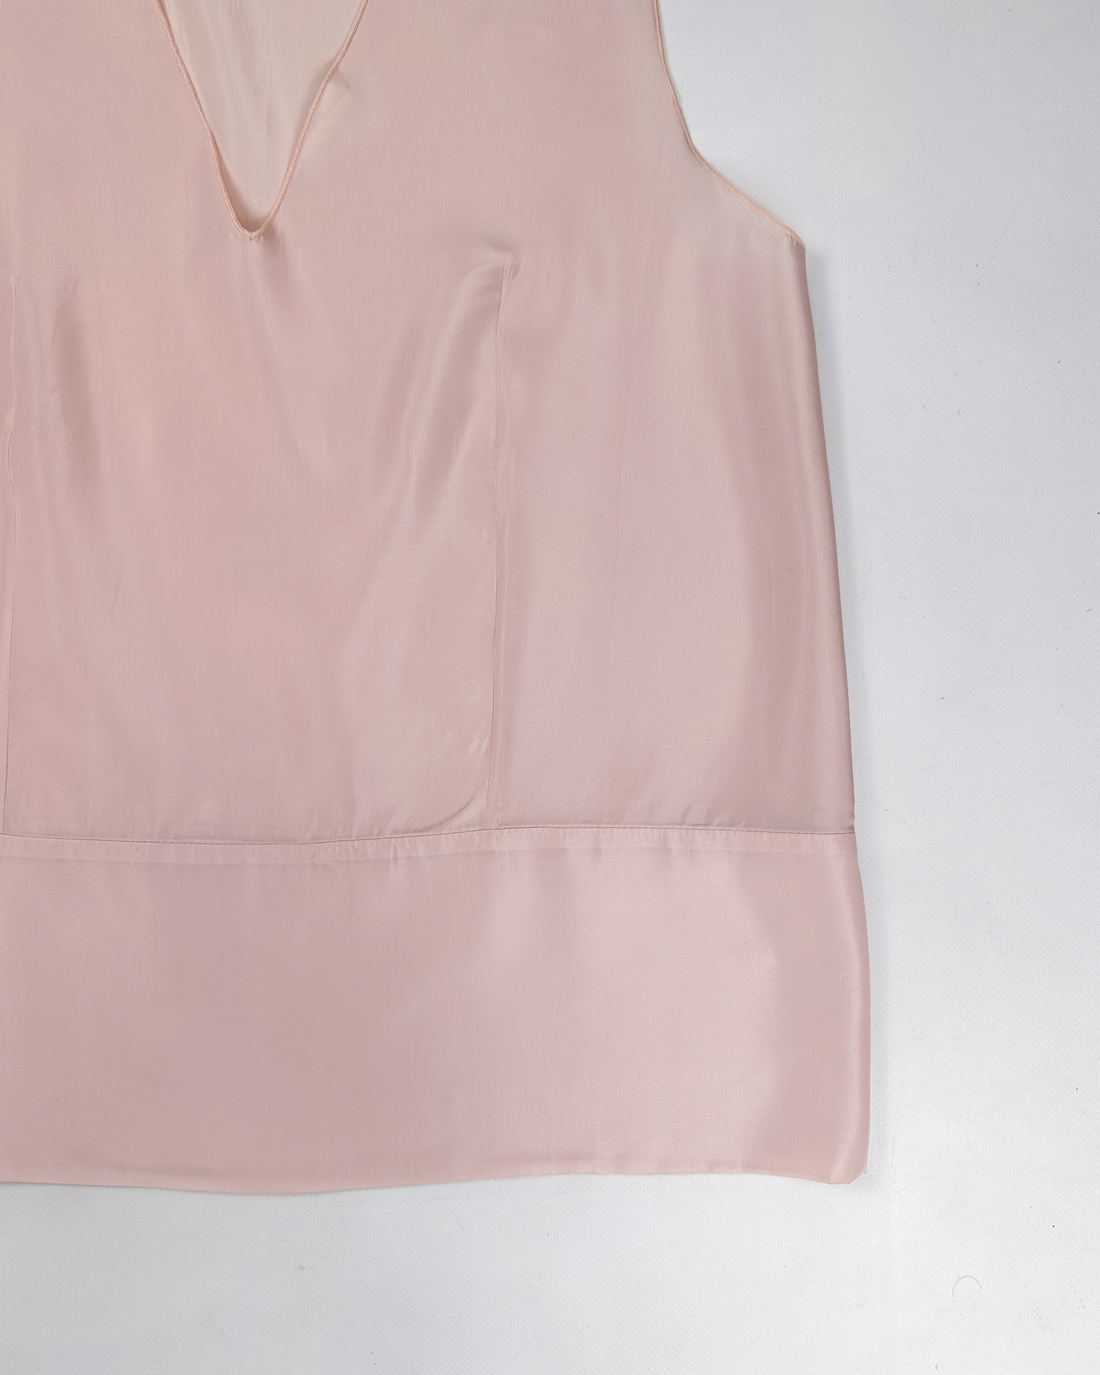 Marni Light Pink Sleeveless Silk Top 2000's